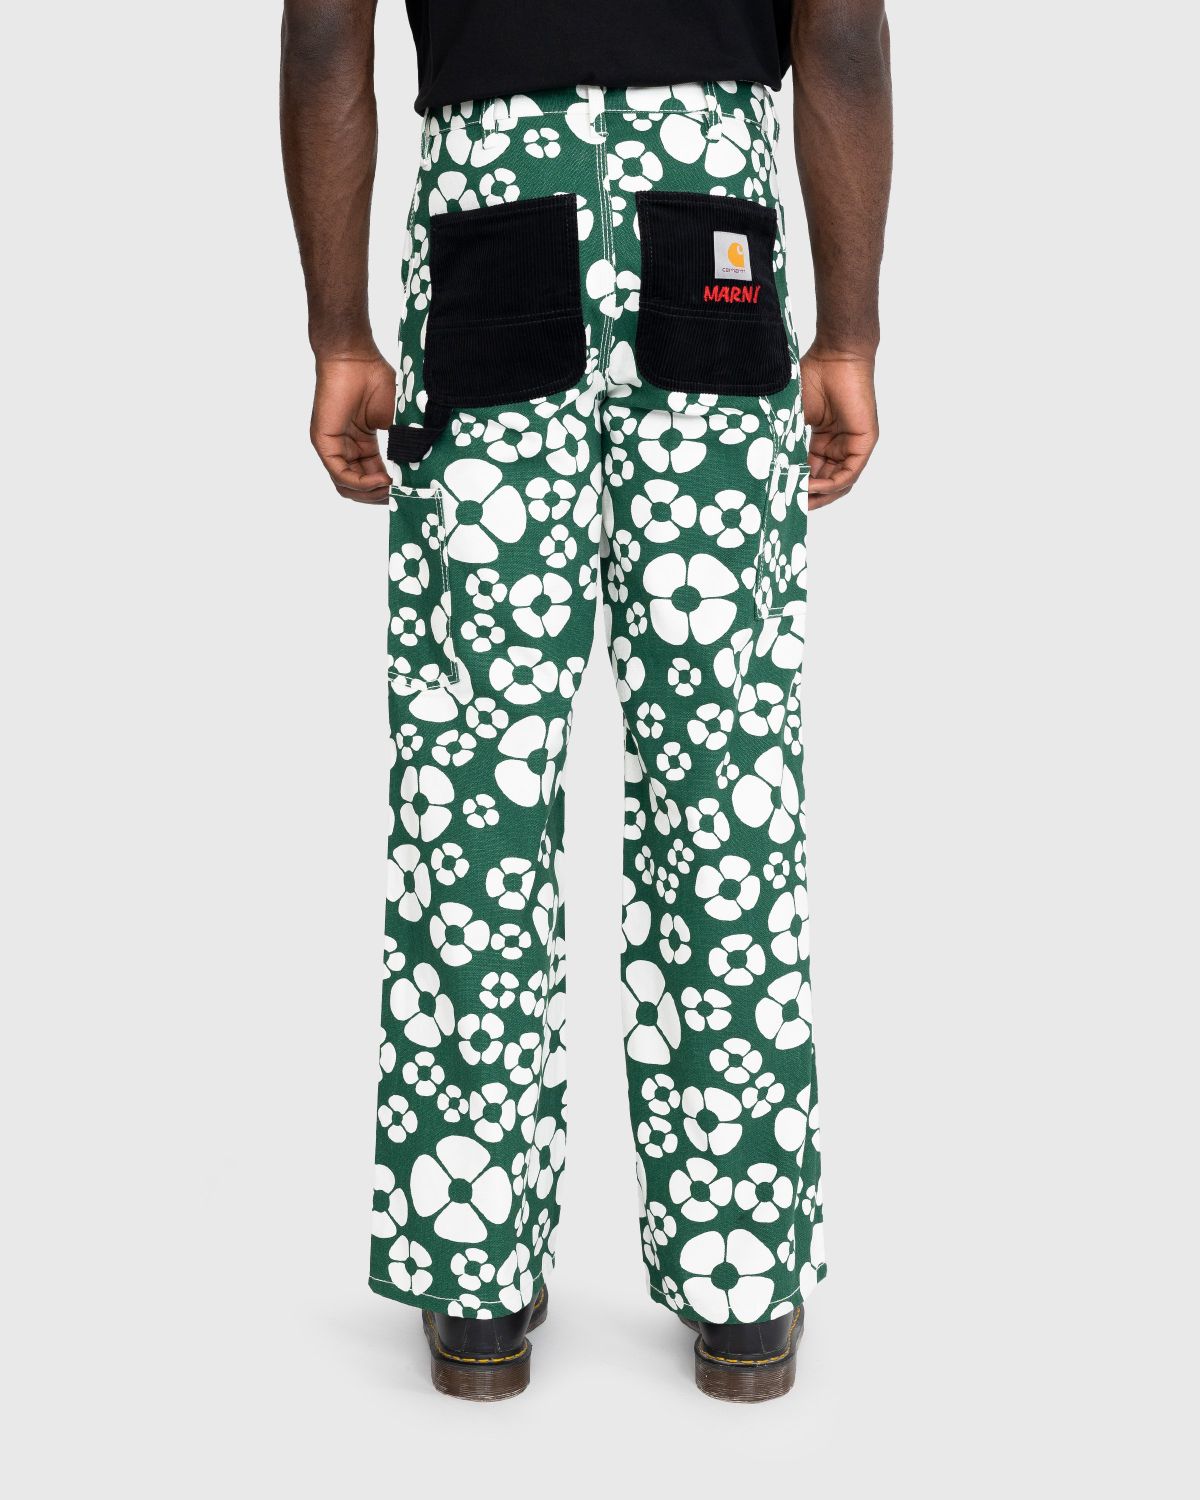 Marni x Carhartt WIP – Floral Trousers Green